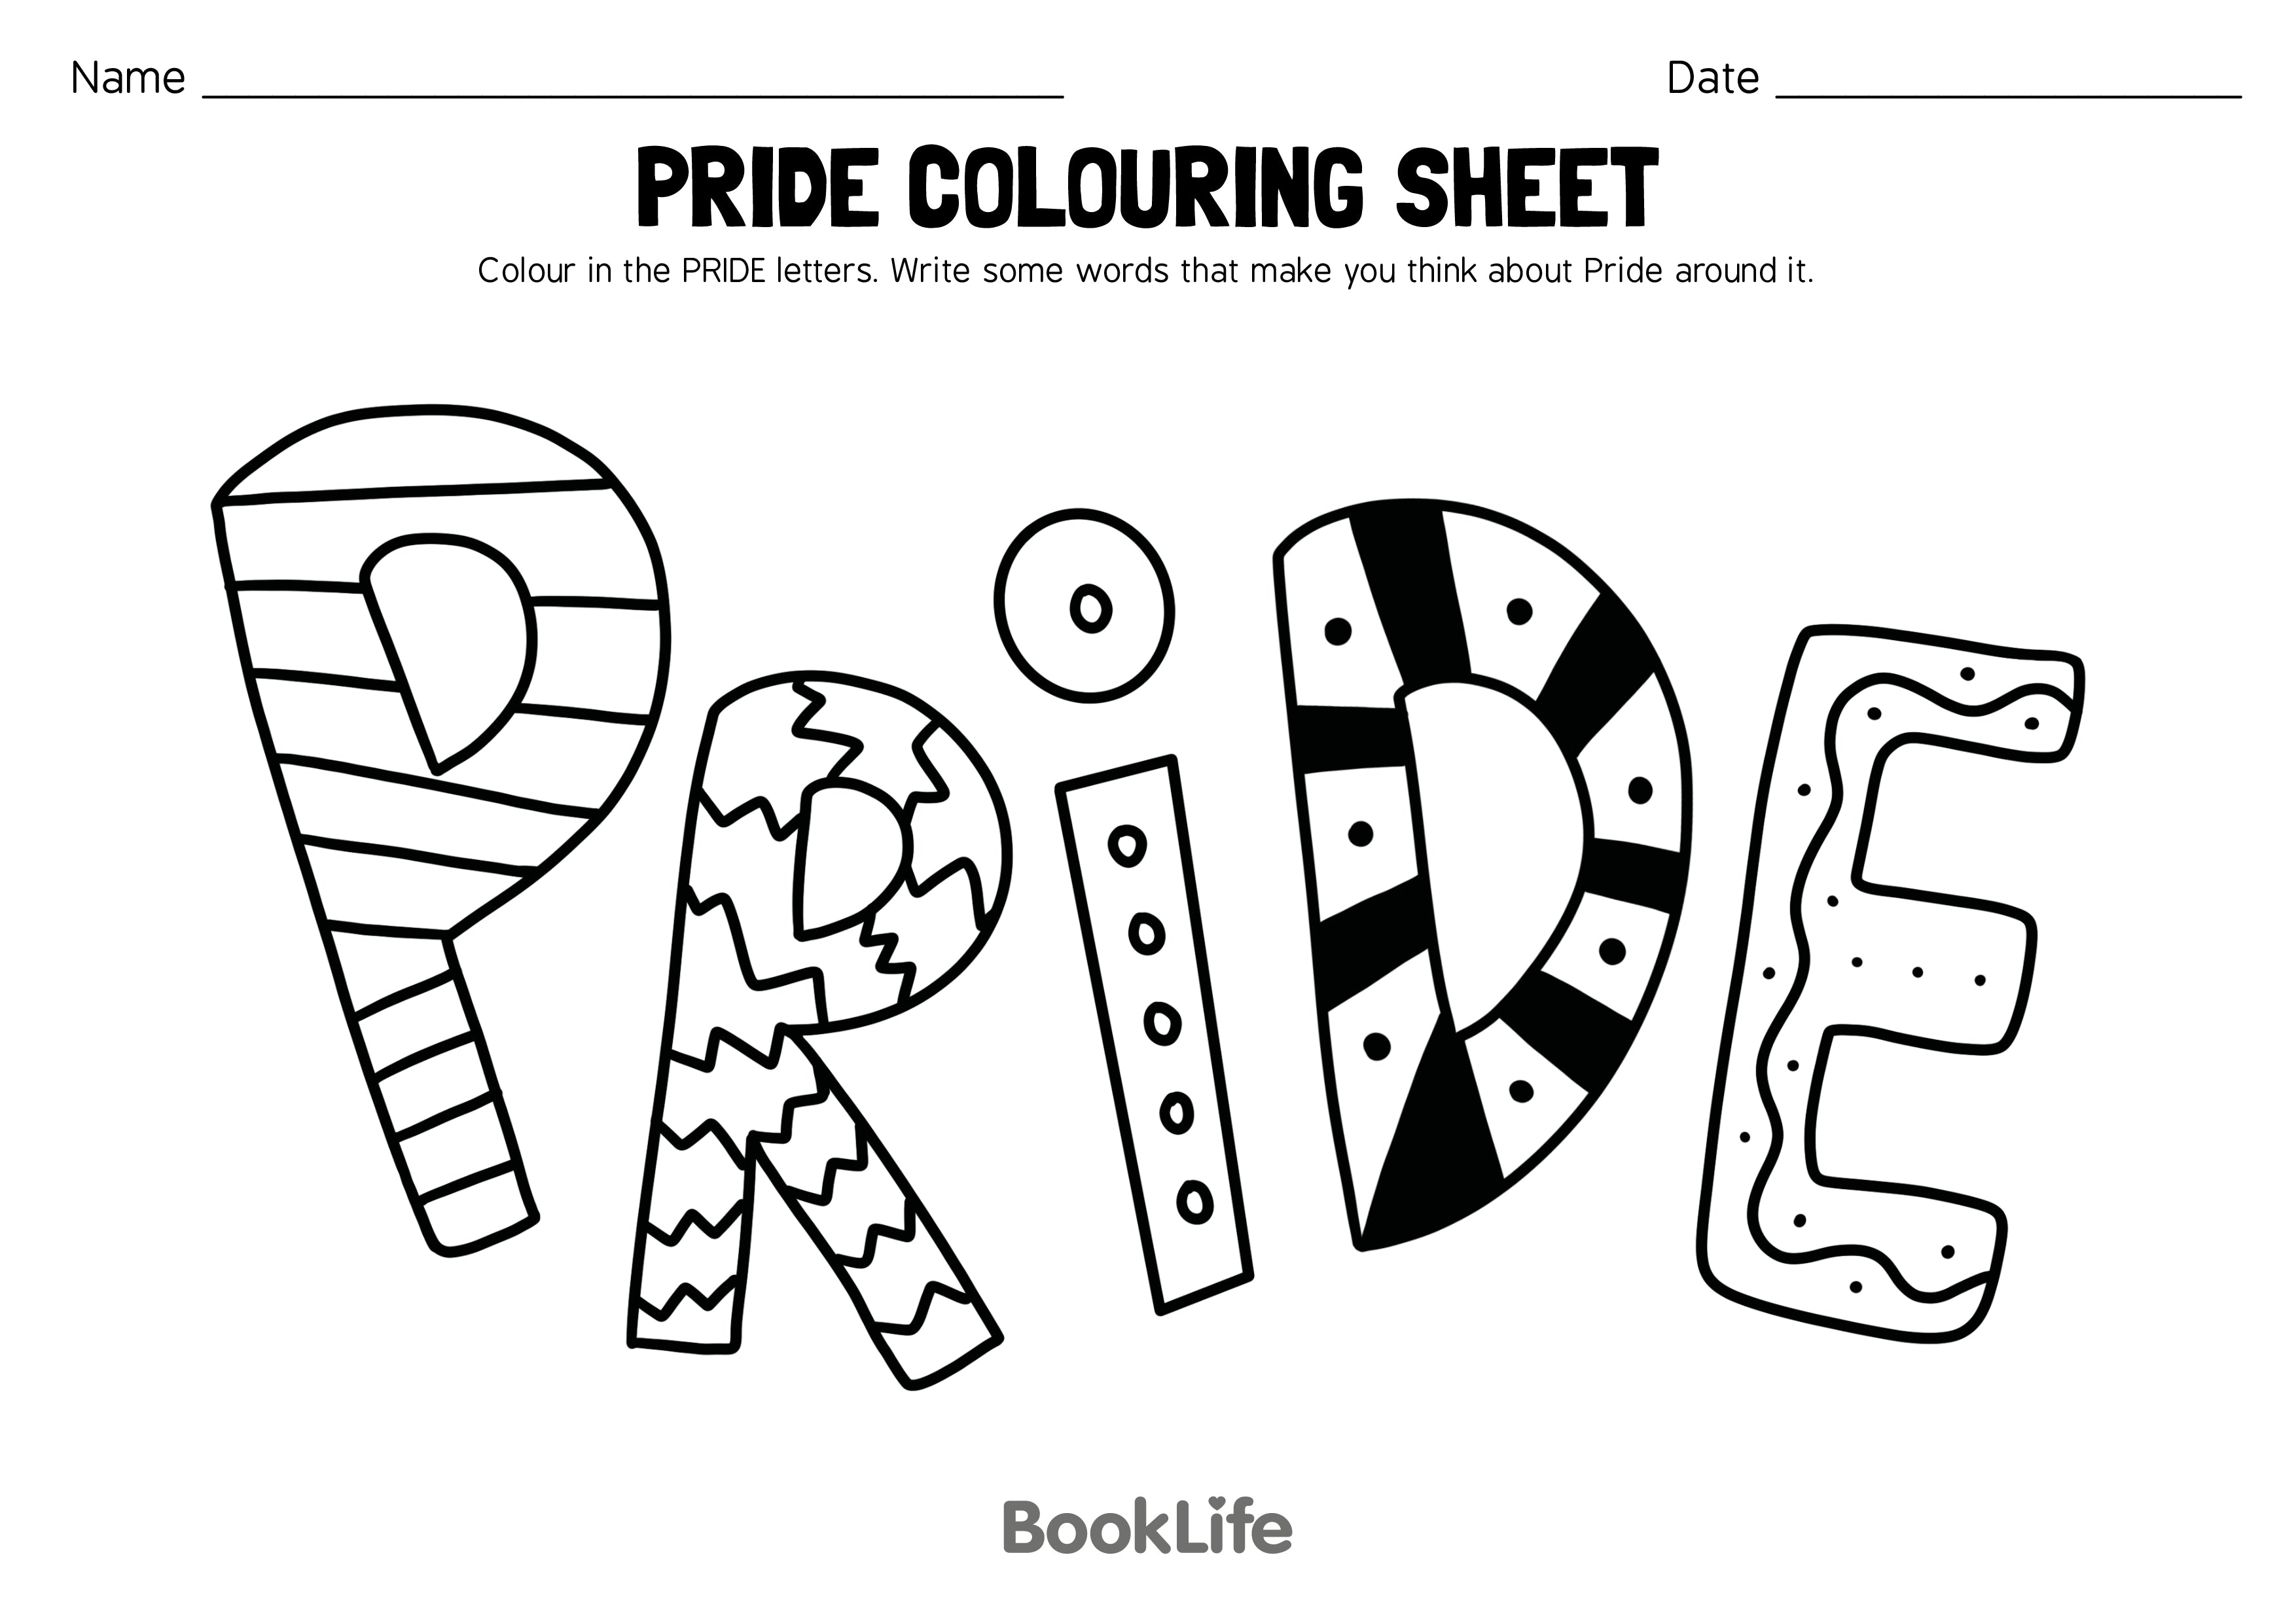 Pride Colouring Sheet